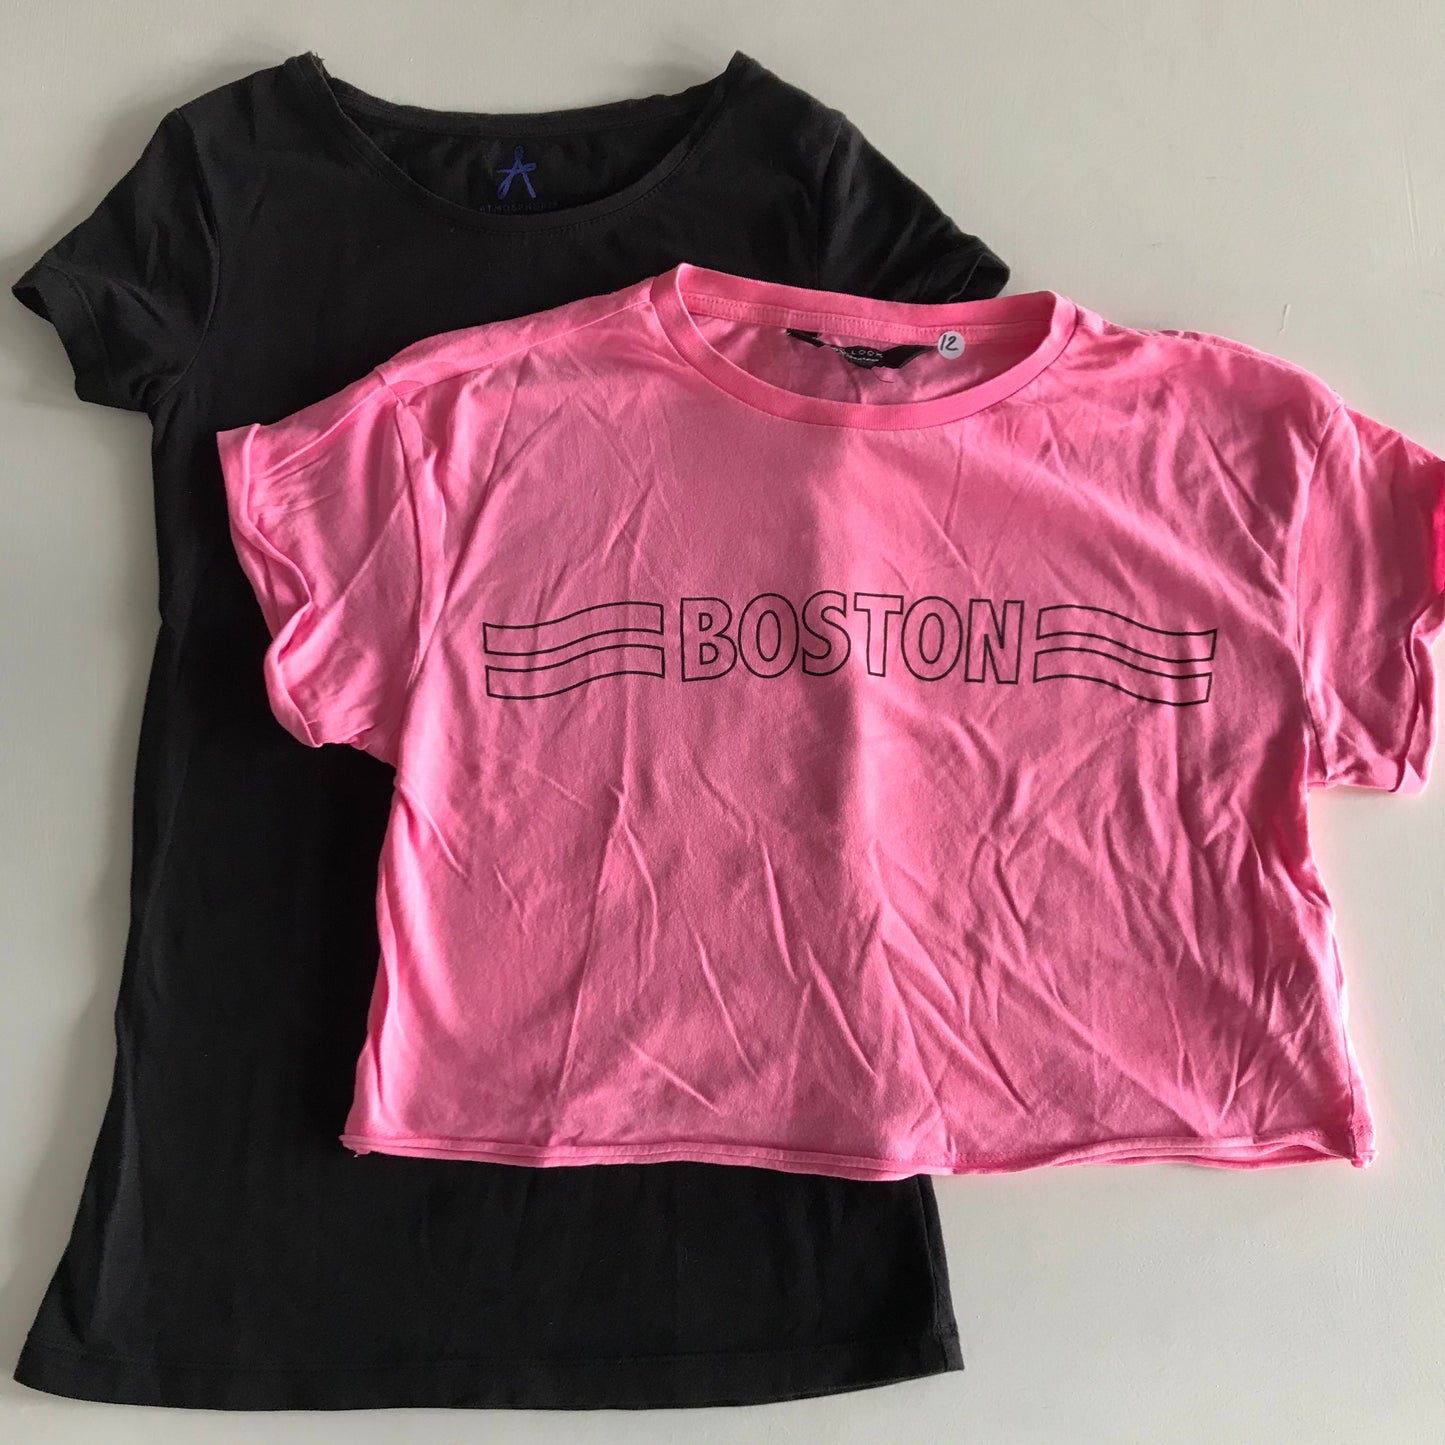 New Look Pink Boston Crop Top and Primark Black T-shirt Bundle Age 12